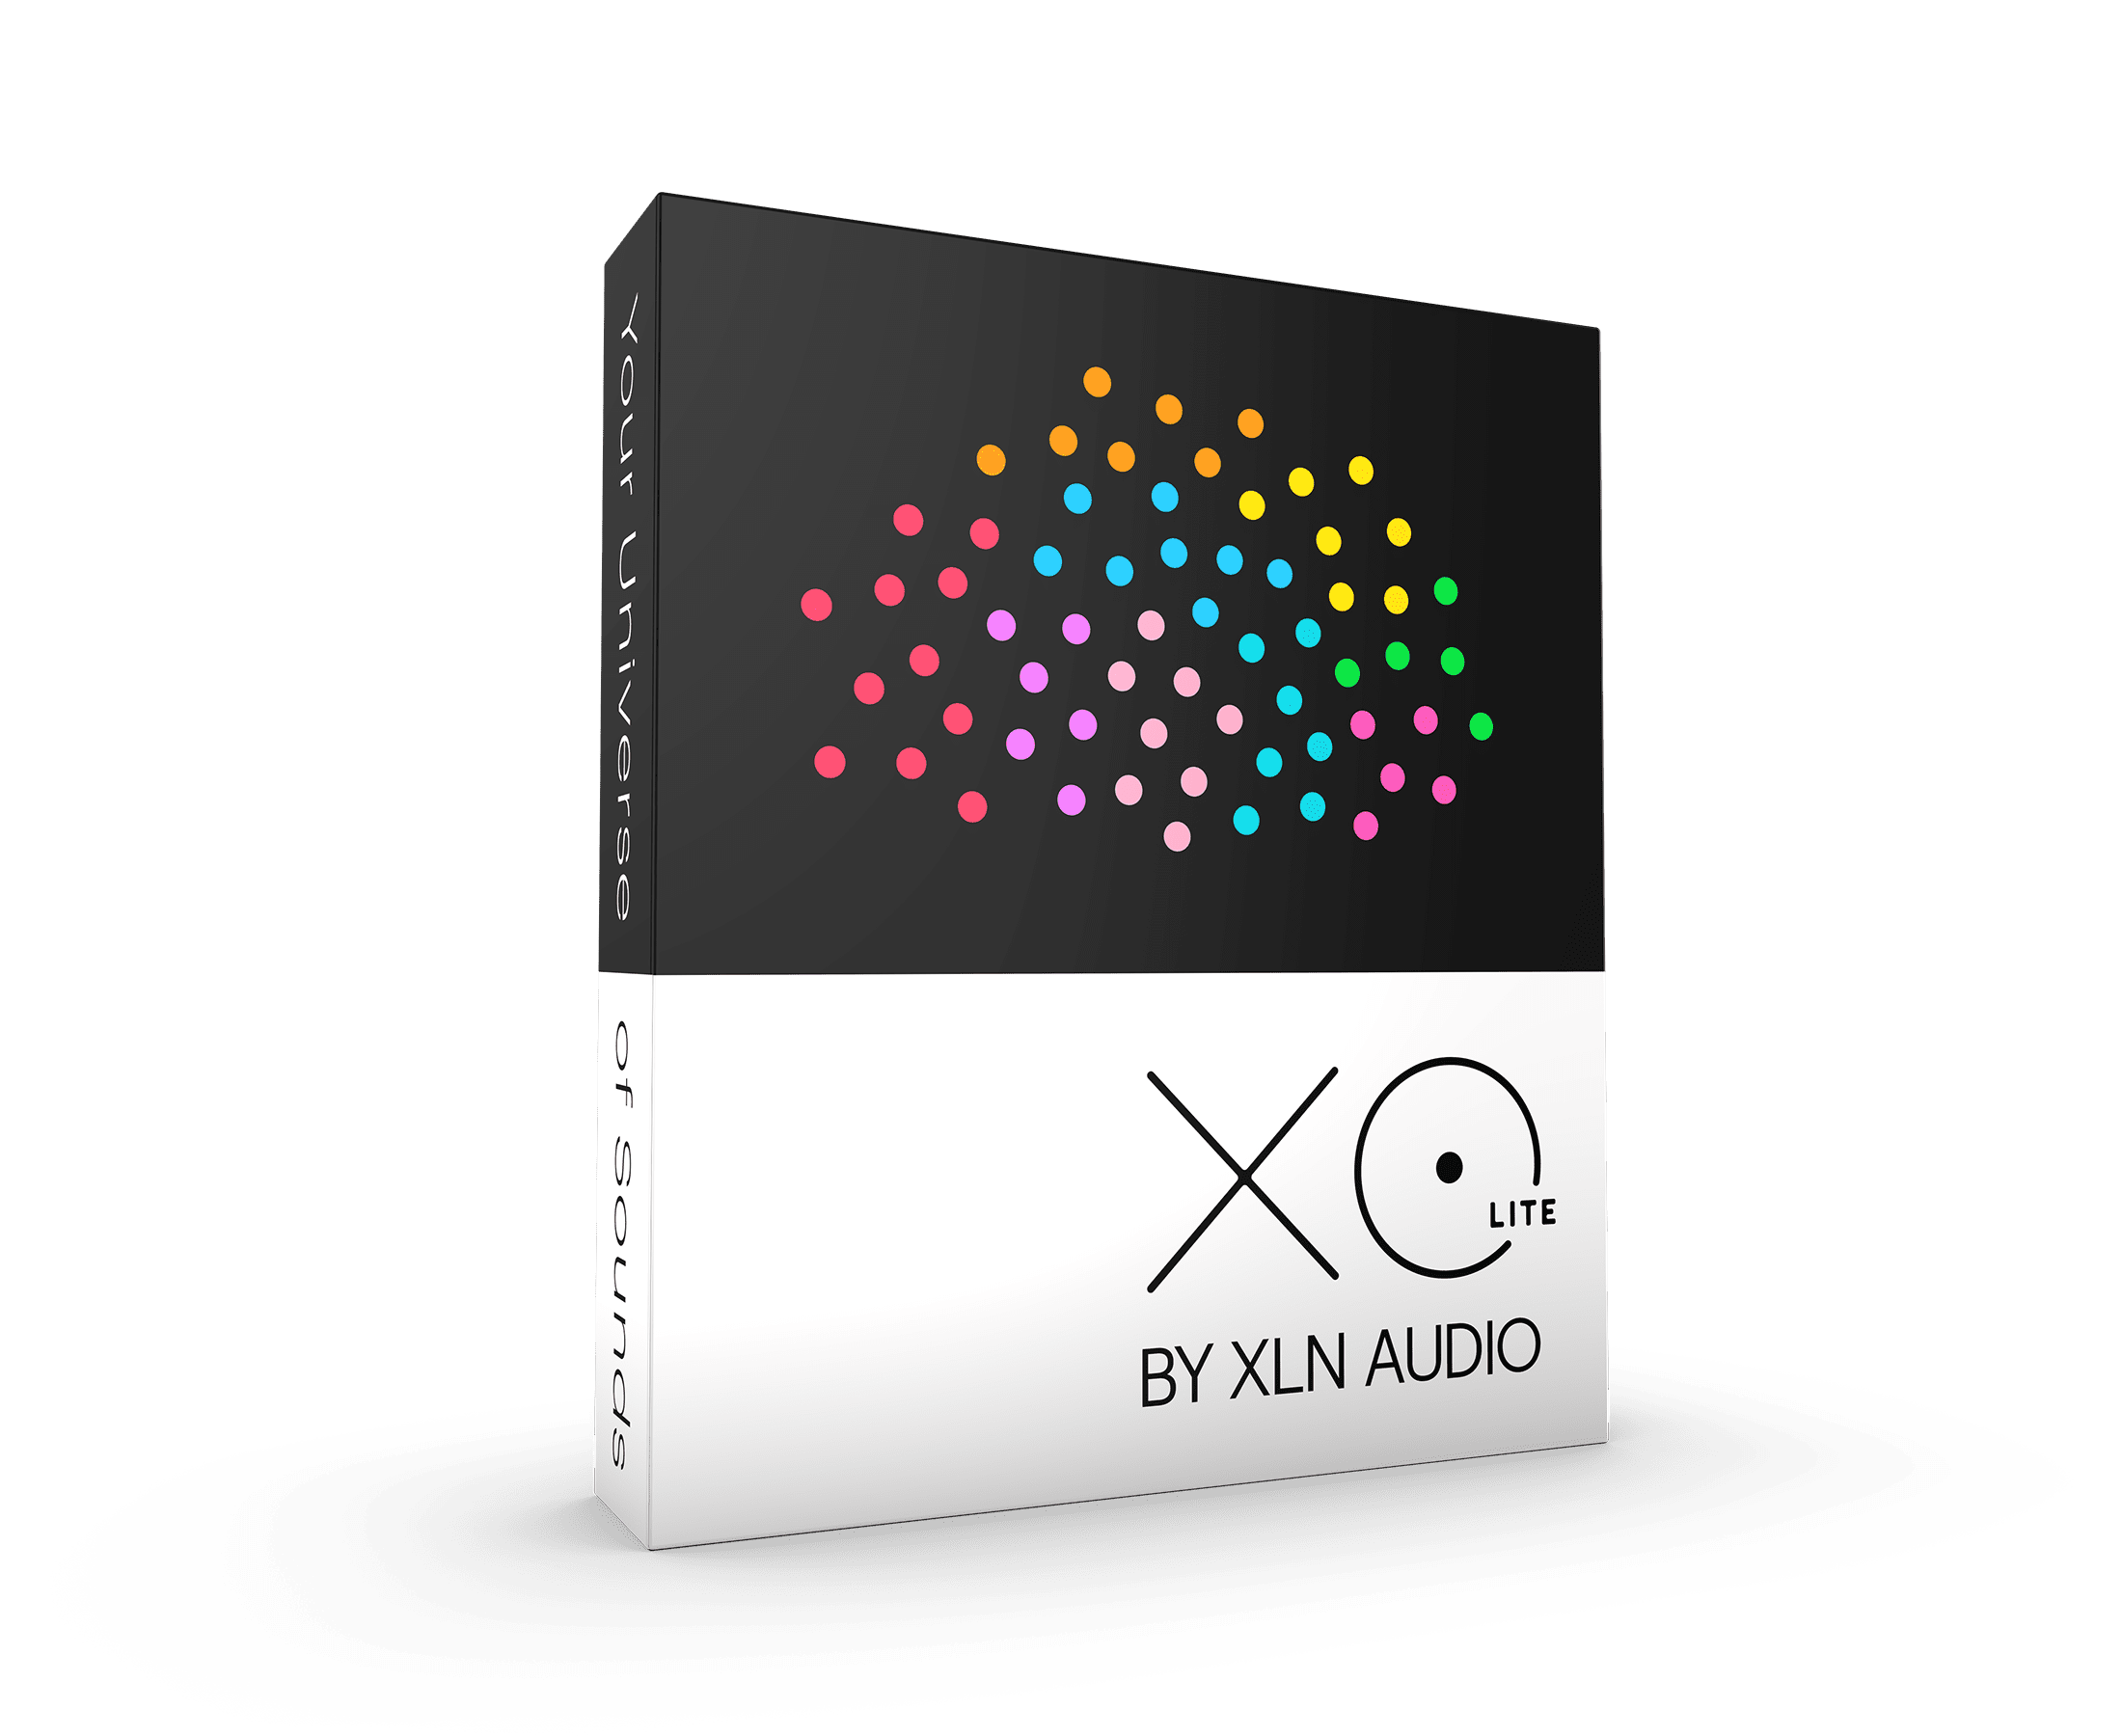 XO Lite by XLN Audio